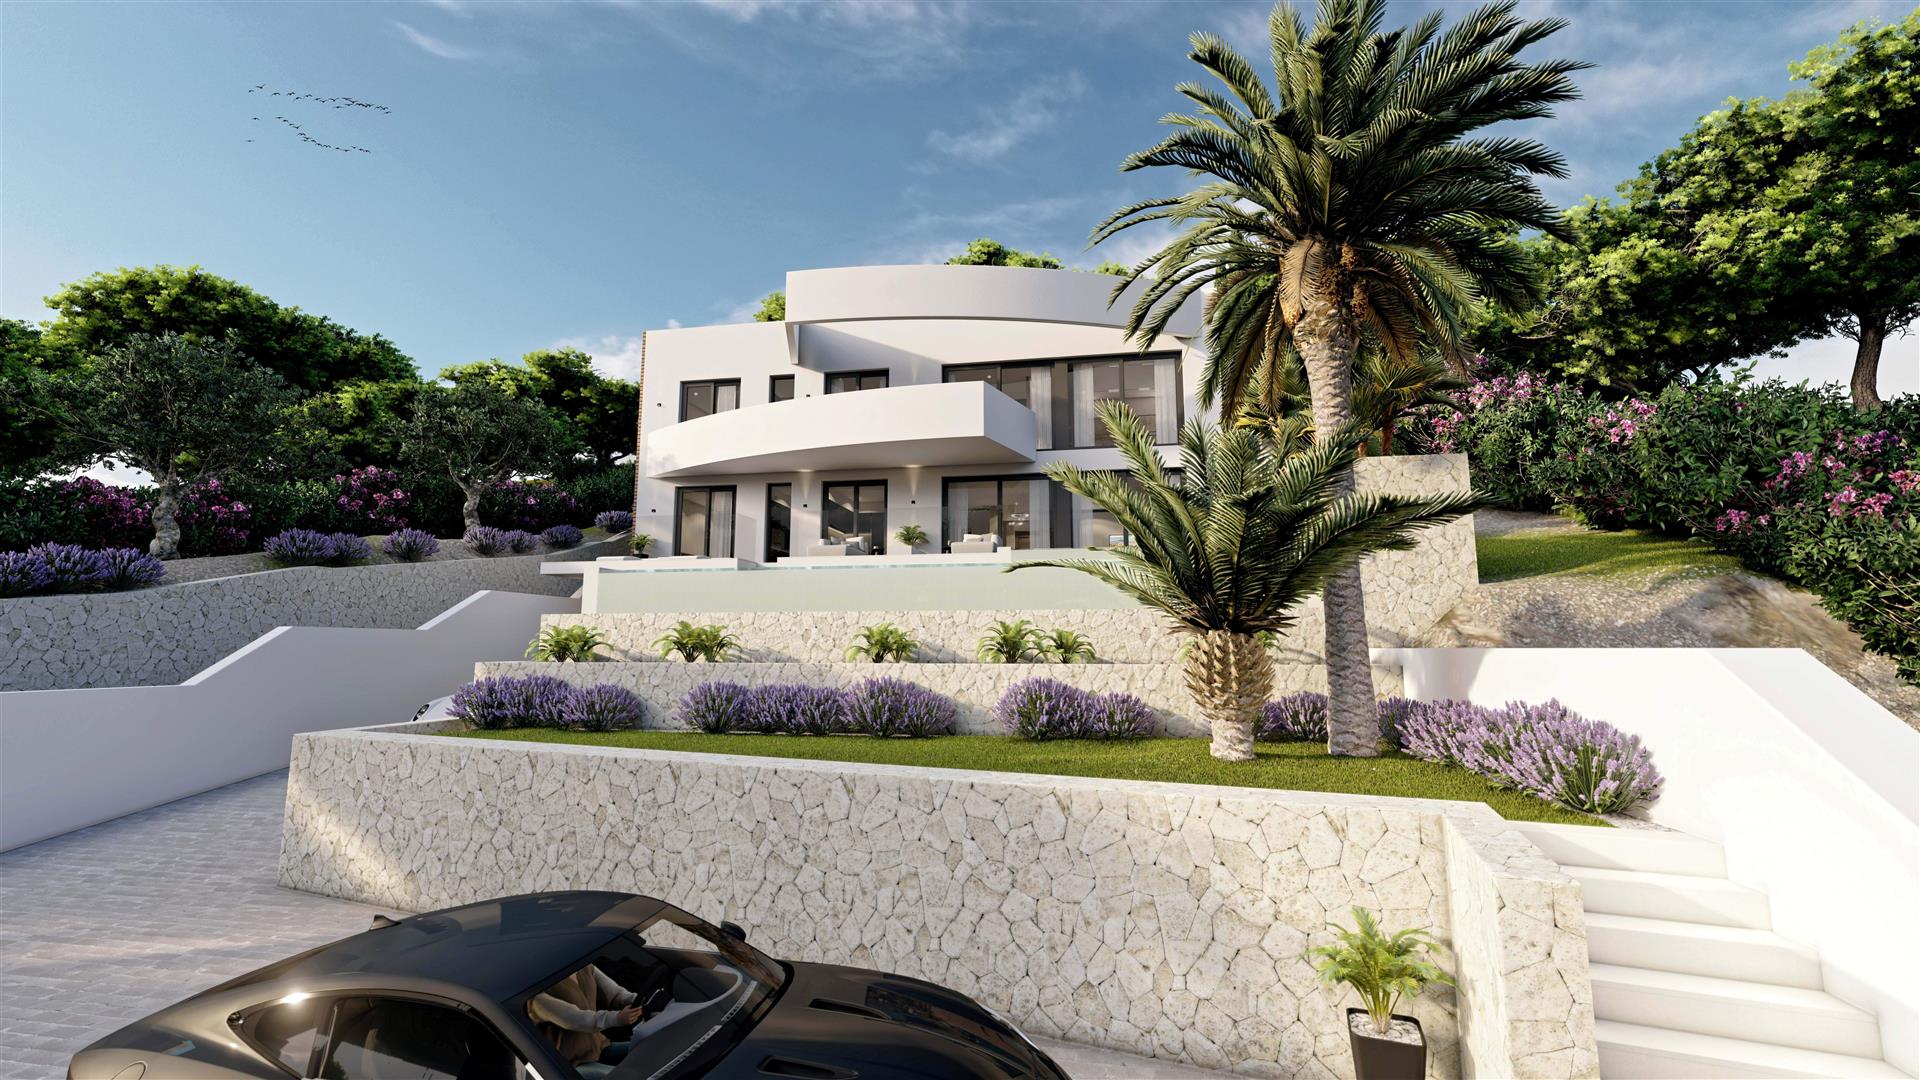 Atemberaubende 308 m² große Luxusvilla in Sierra Altea